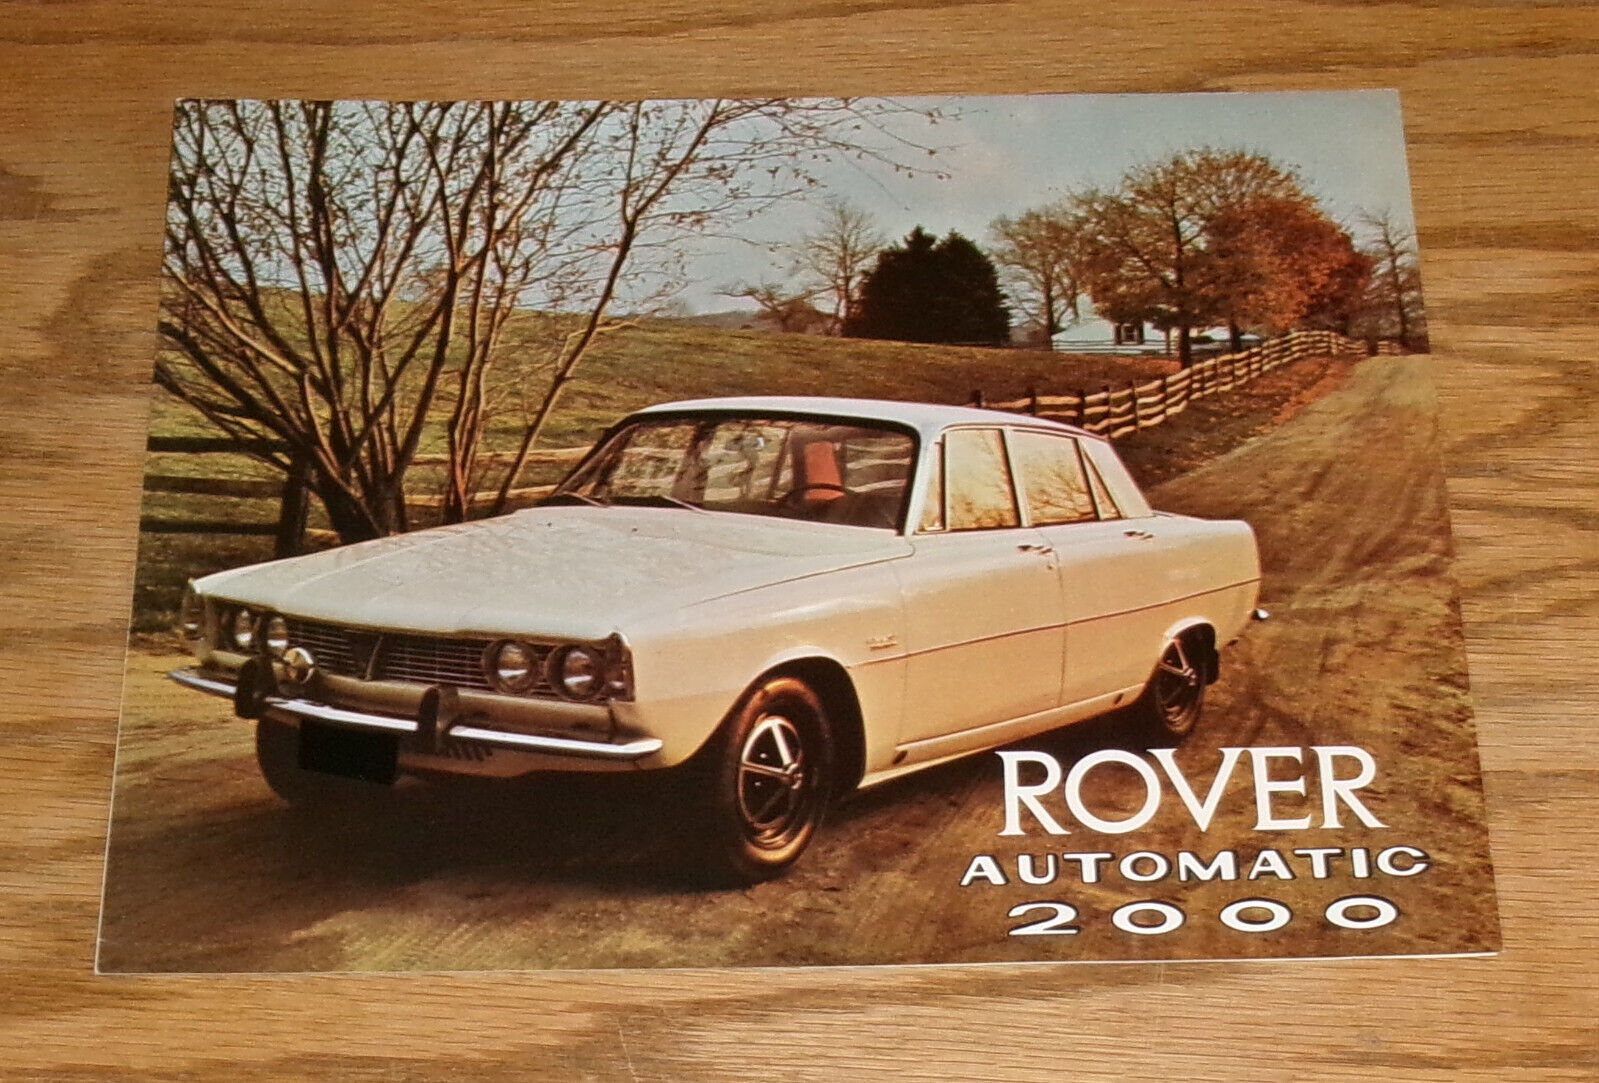 Original 1968 Rover 2000 Automatic Sales Brochure 68